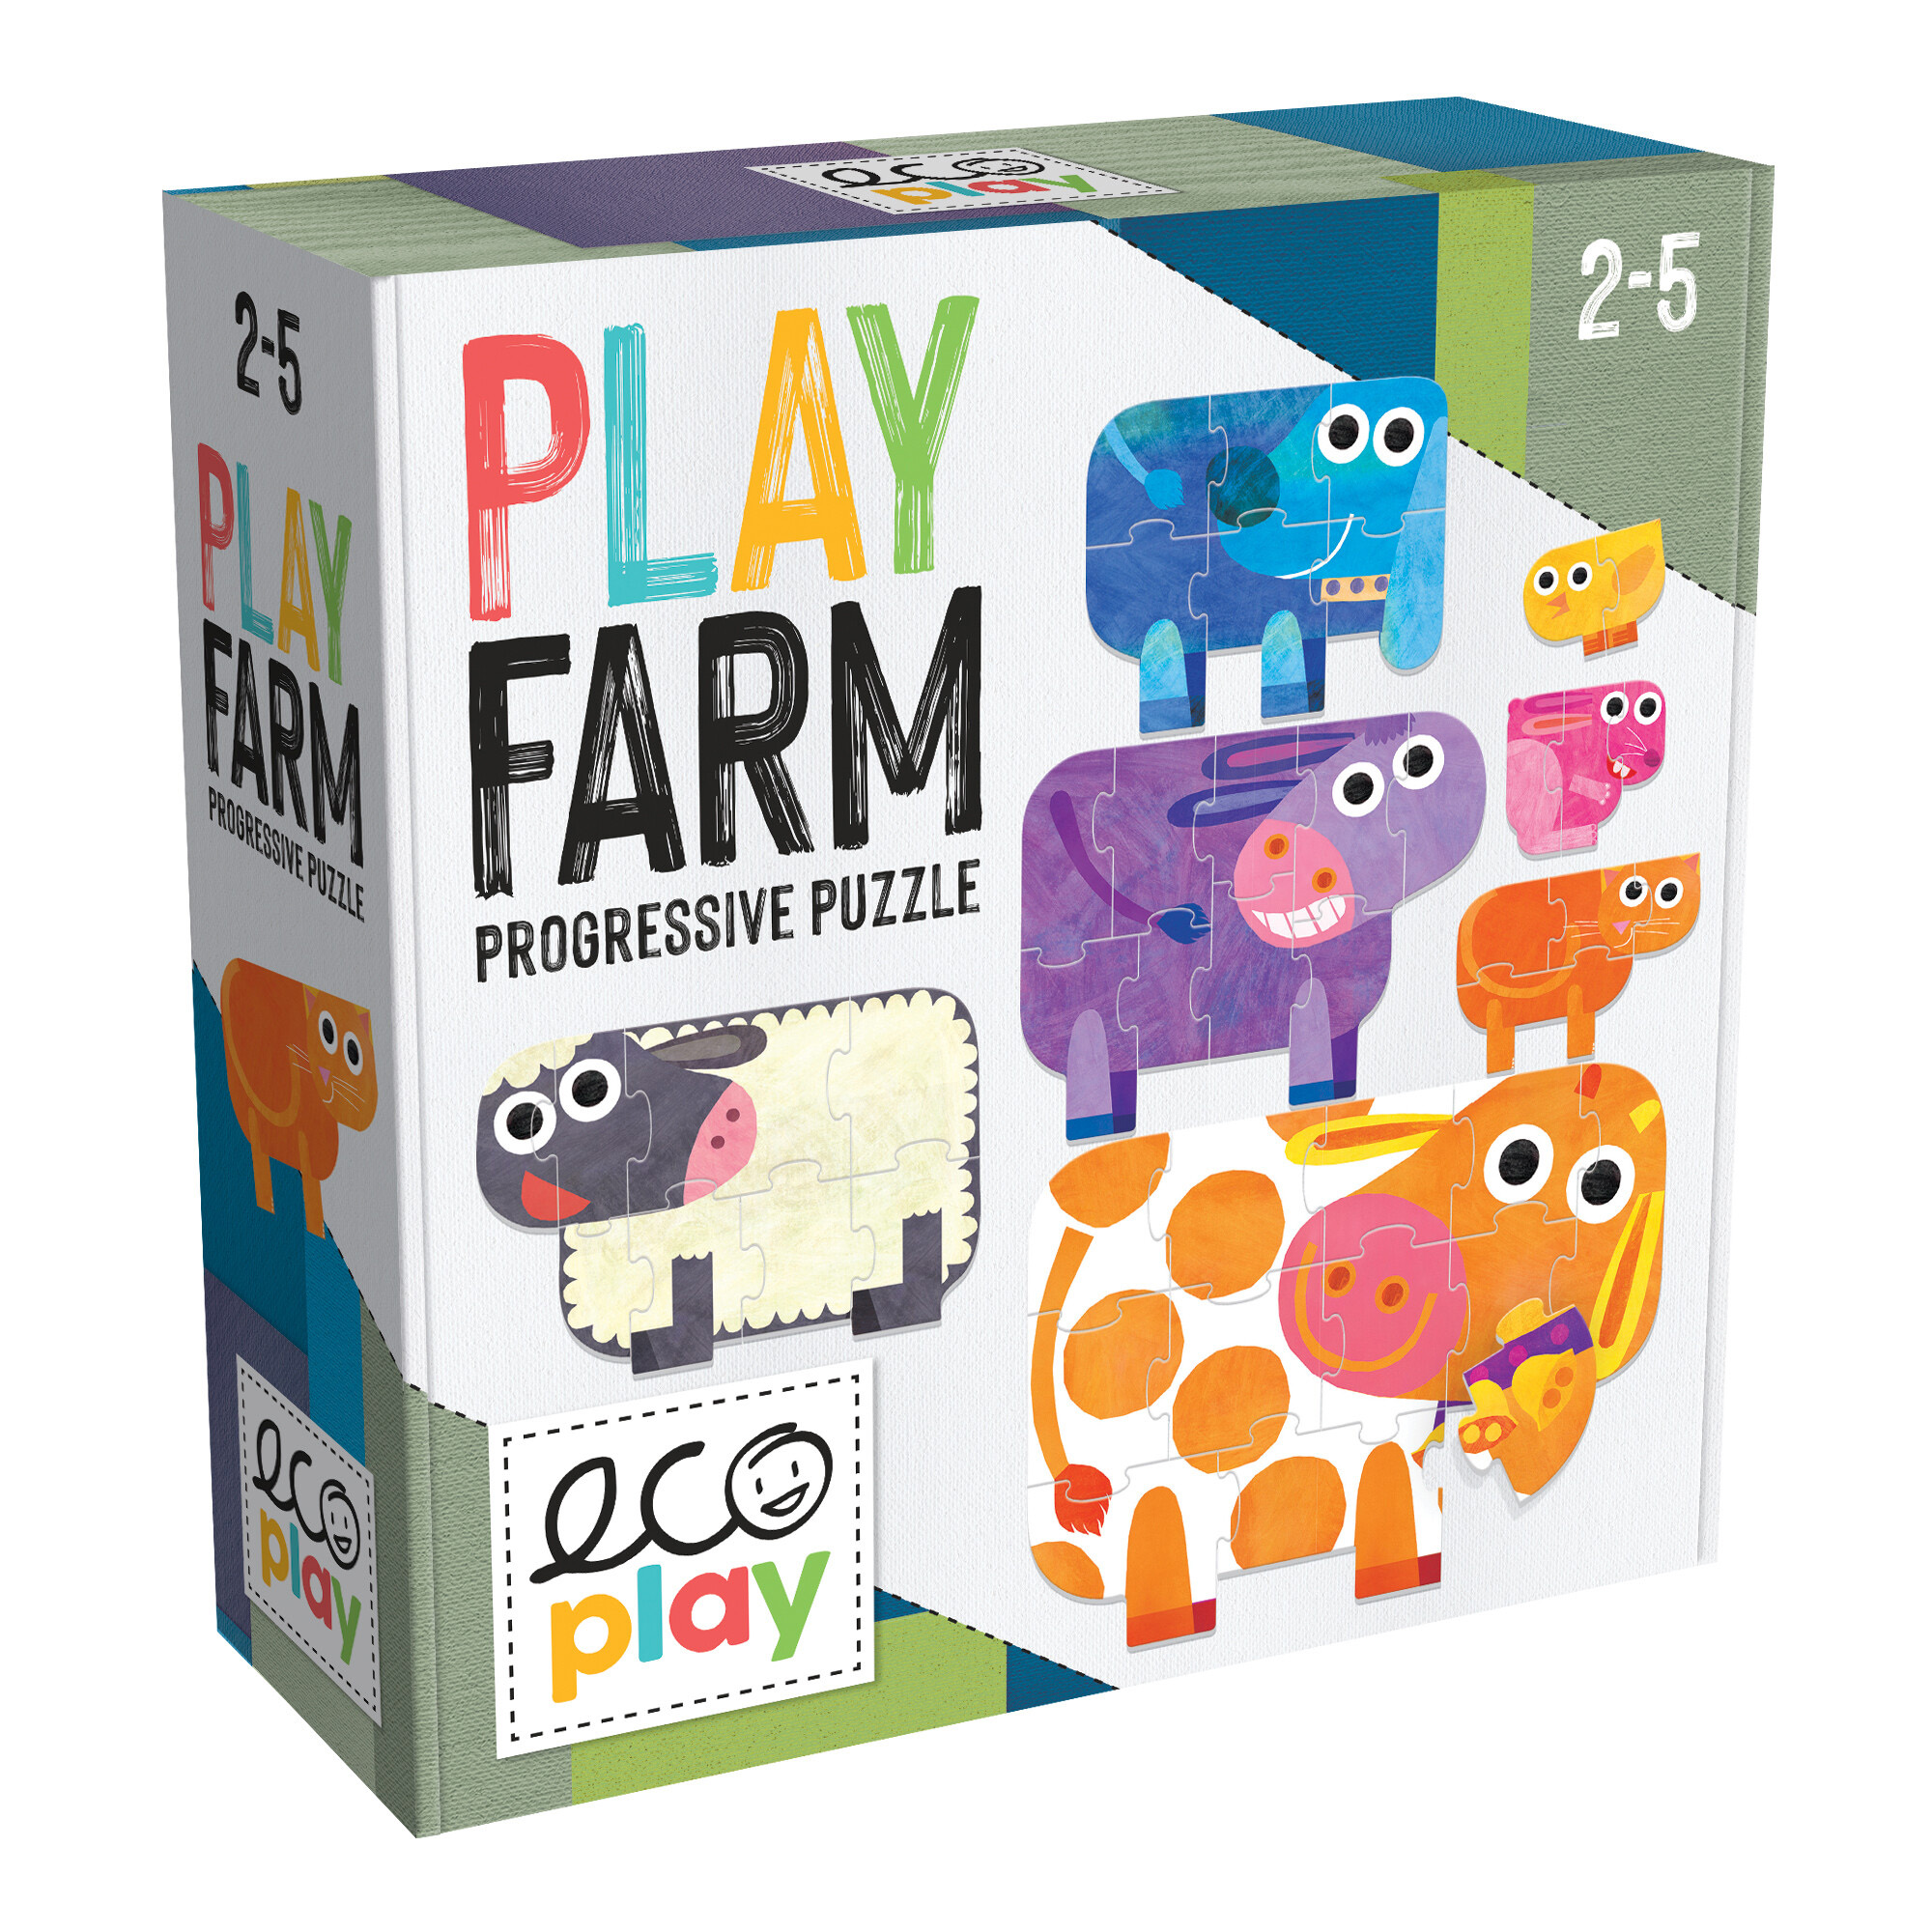 Play Farm Progressive Puzzle - Ecoplay